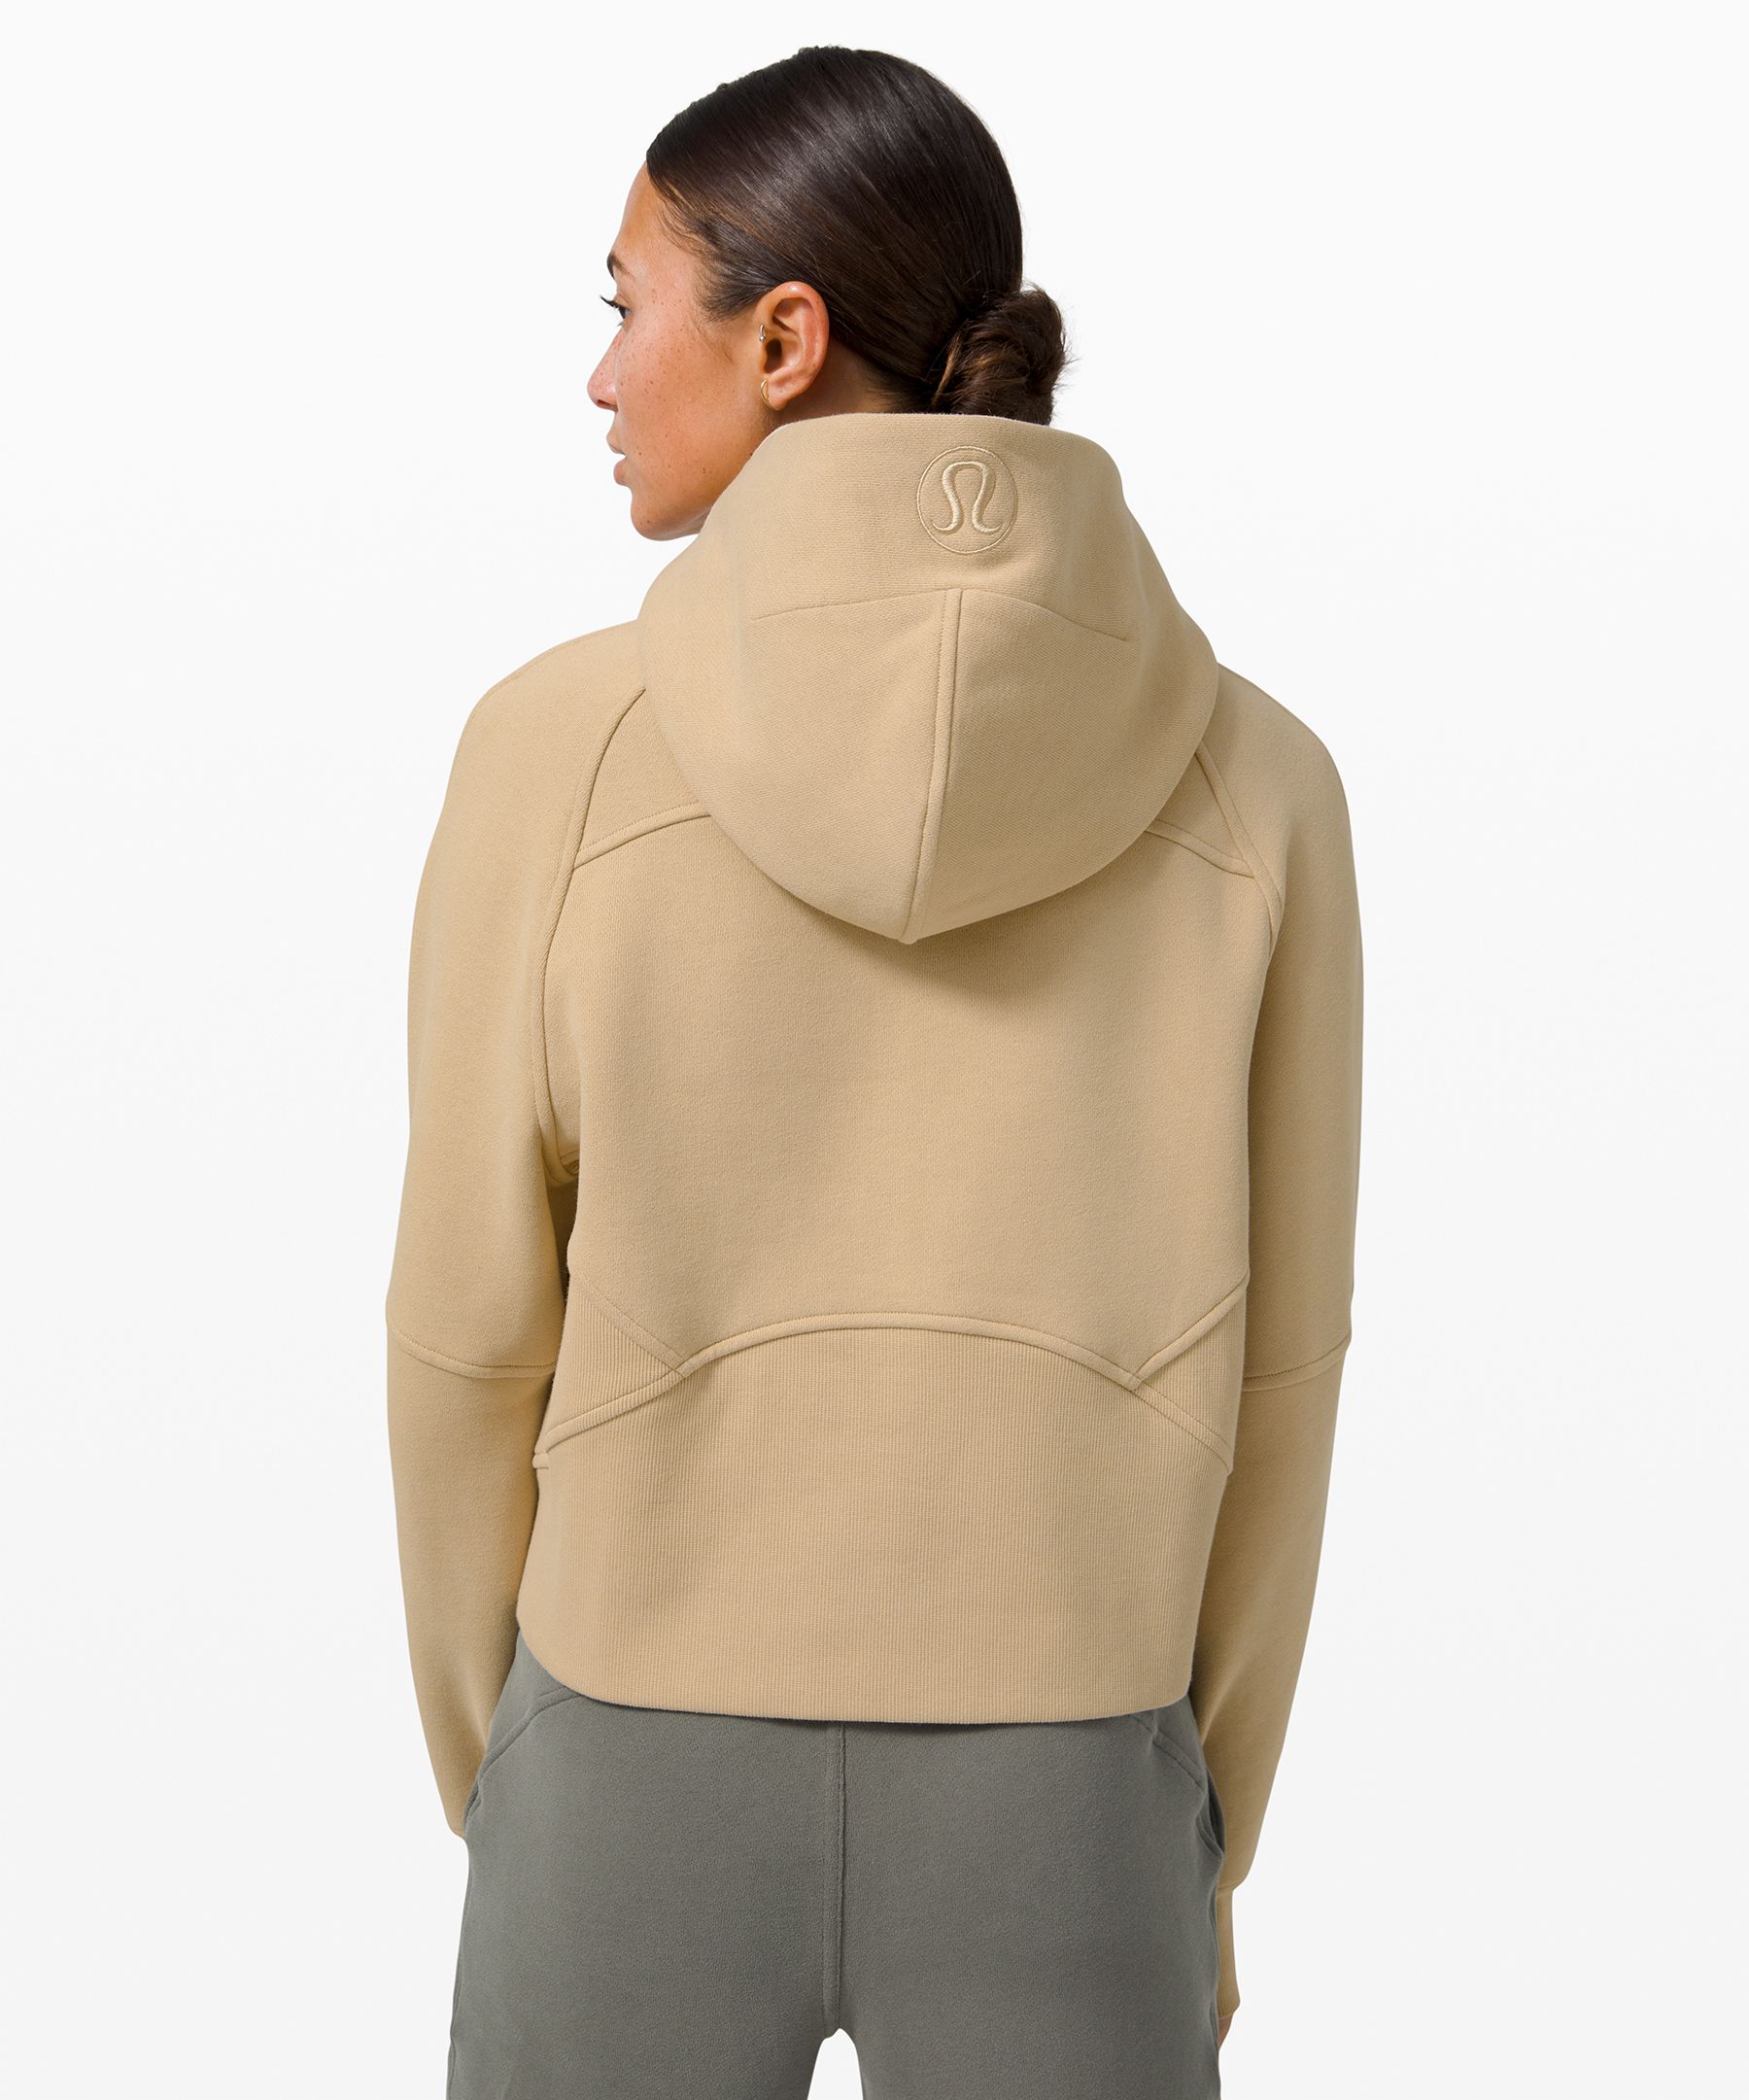 lululemon zip up jacket